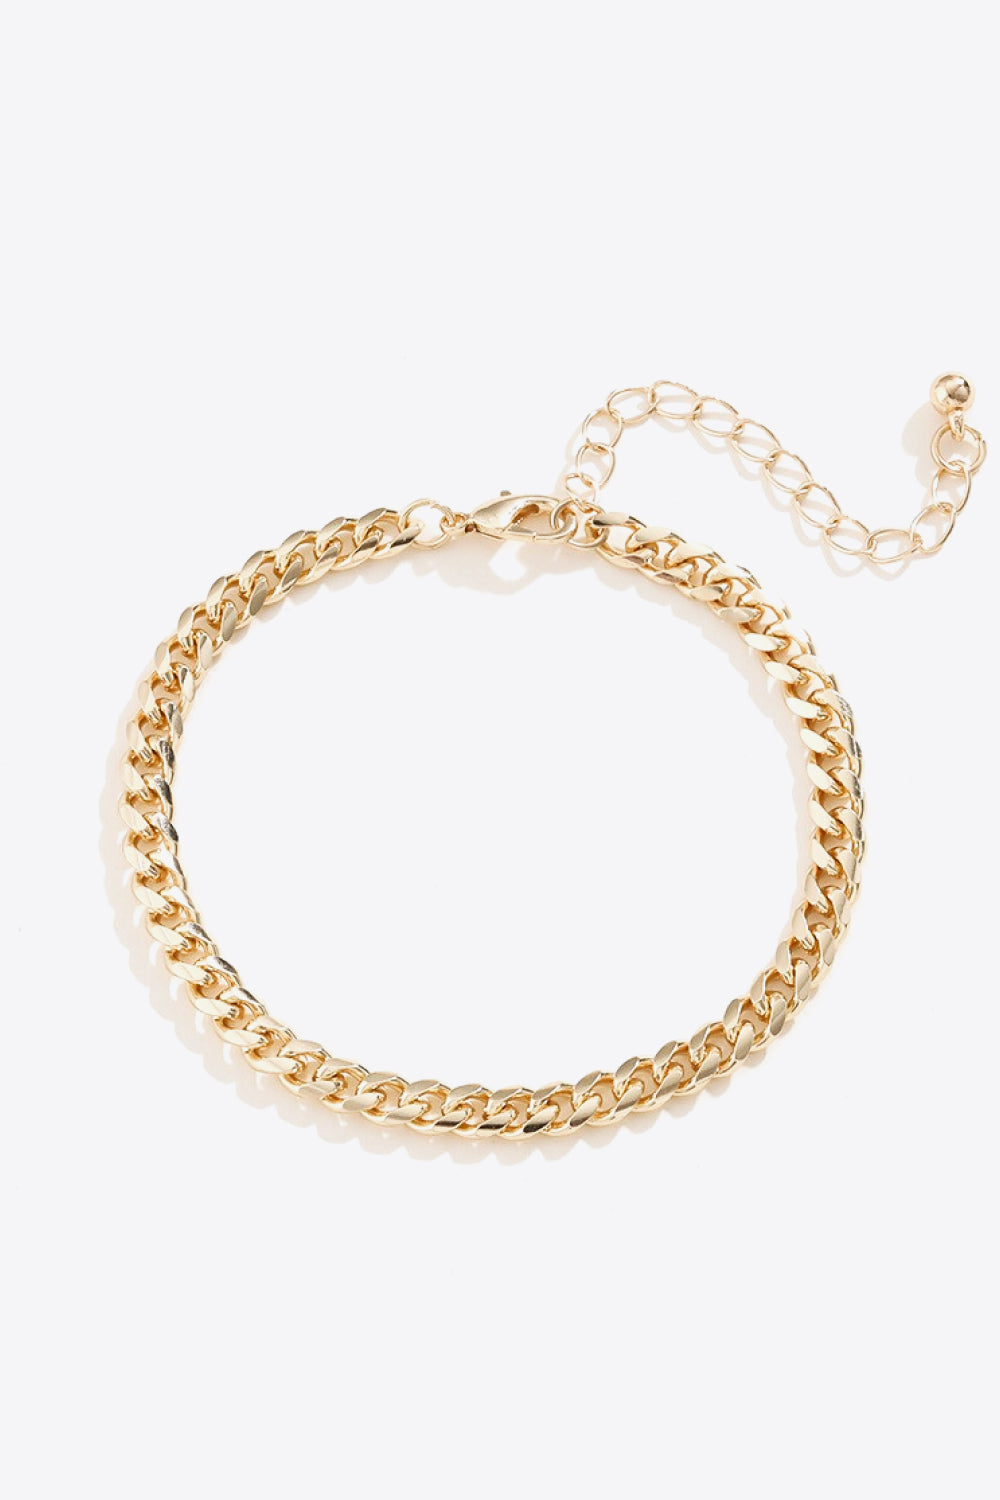 Curb Chain Copper Bracelet - Gold / One Size - Women’s Jewelry - Bracelets - 1 - 2024